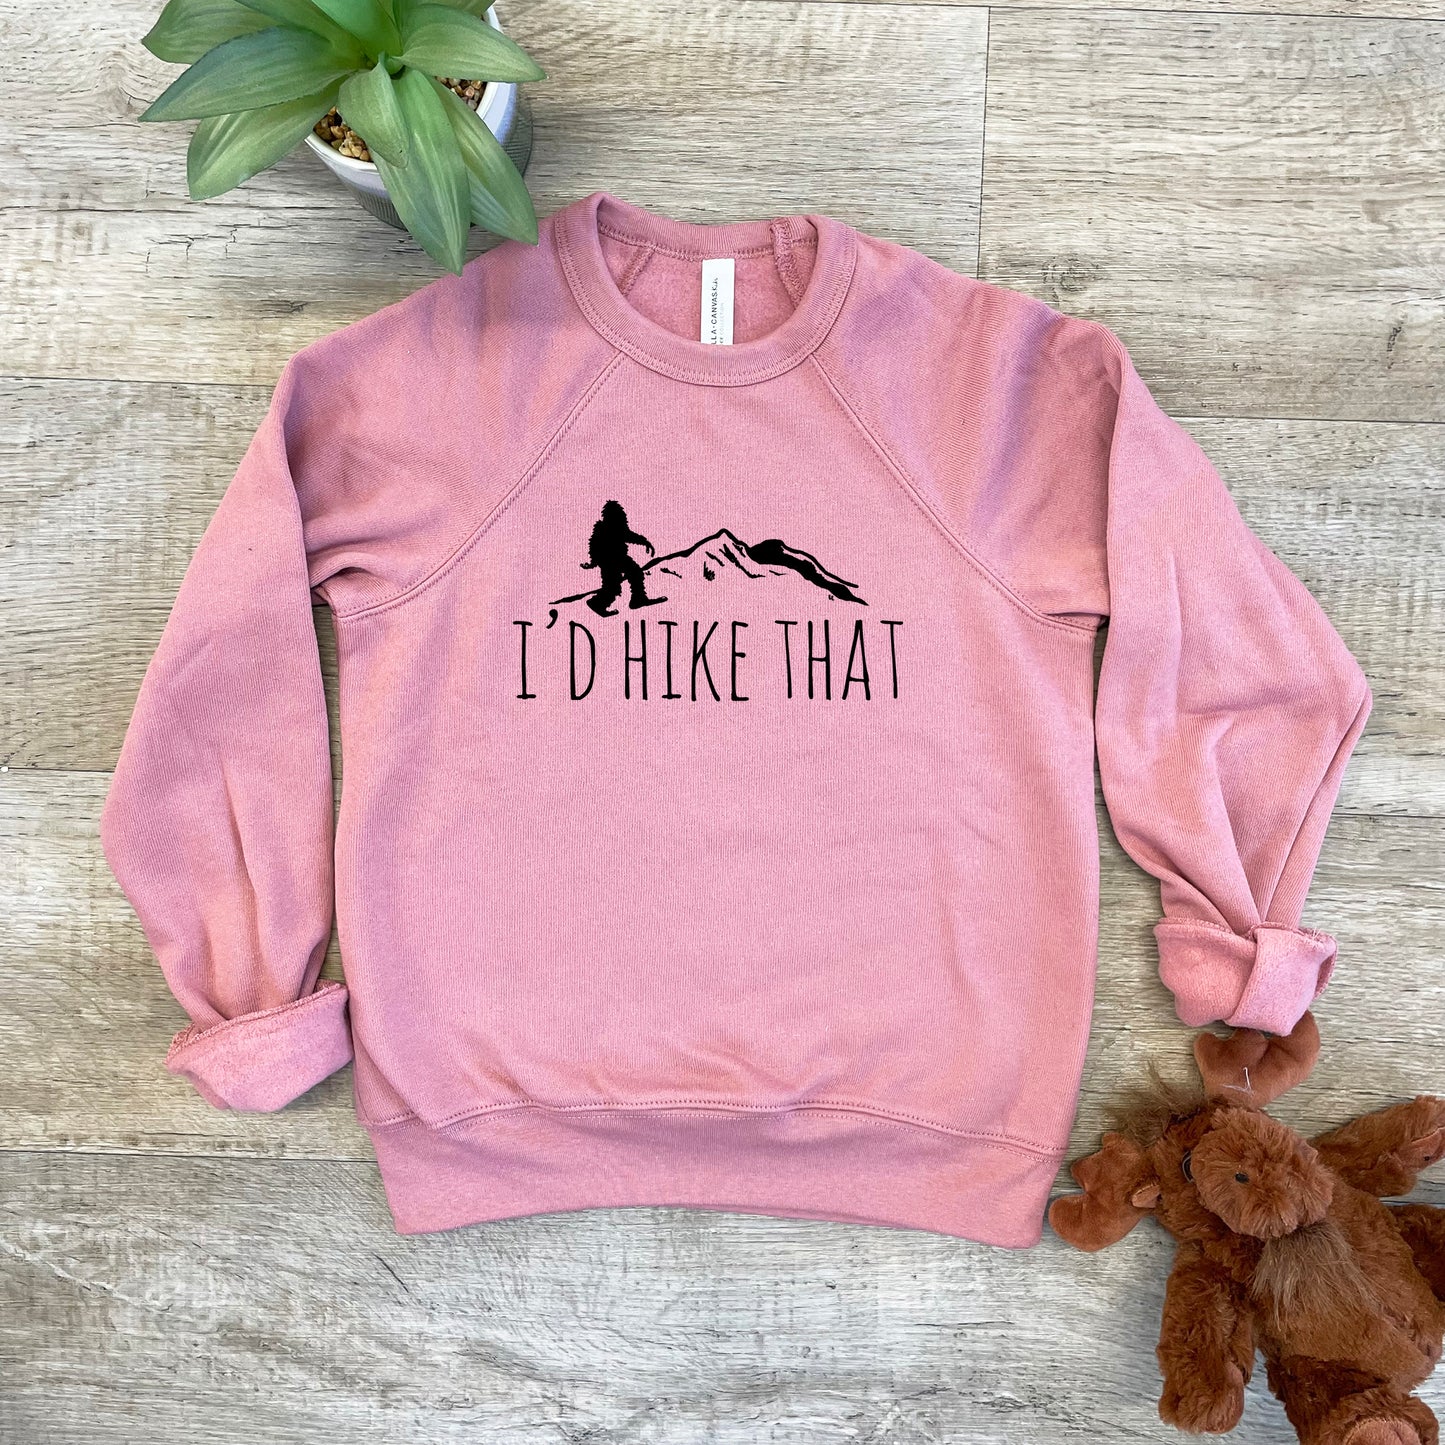 I'd Hike That - Kid's Sweatshirt - Heather Gray or Mauve